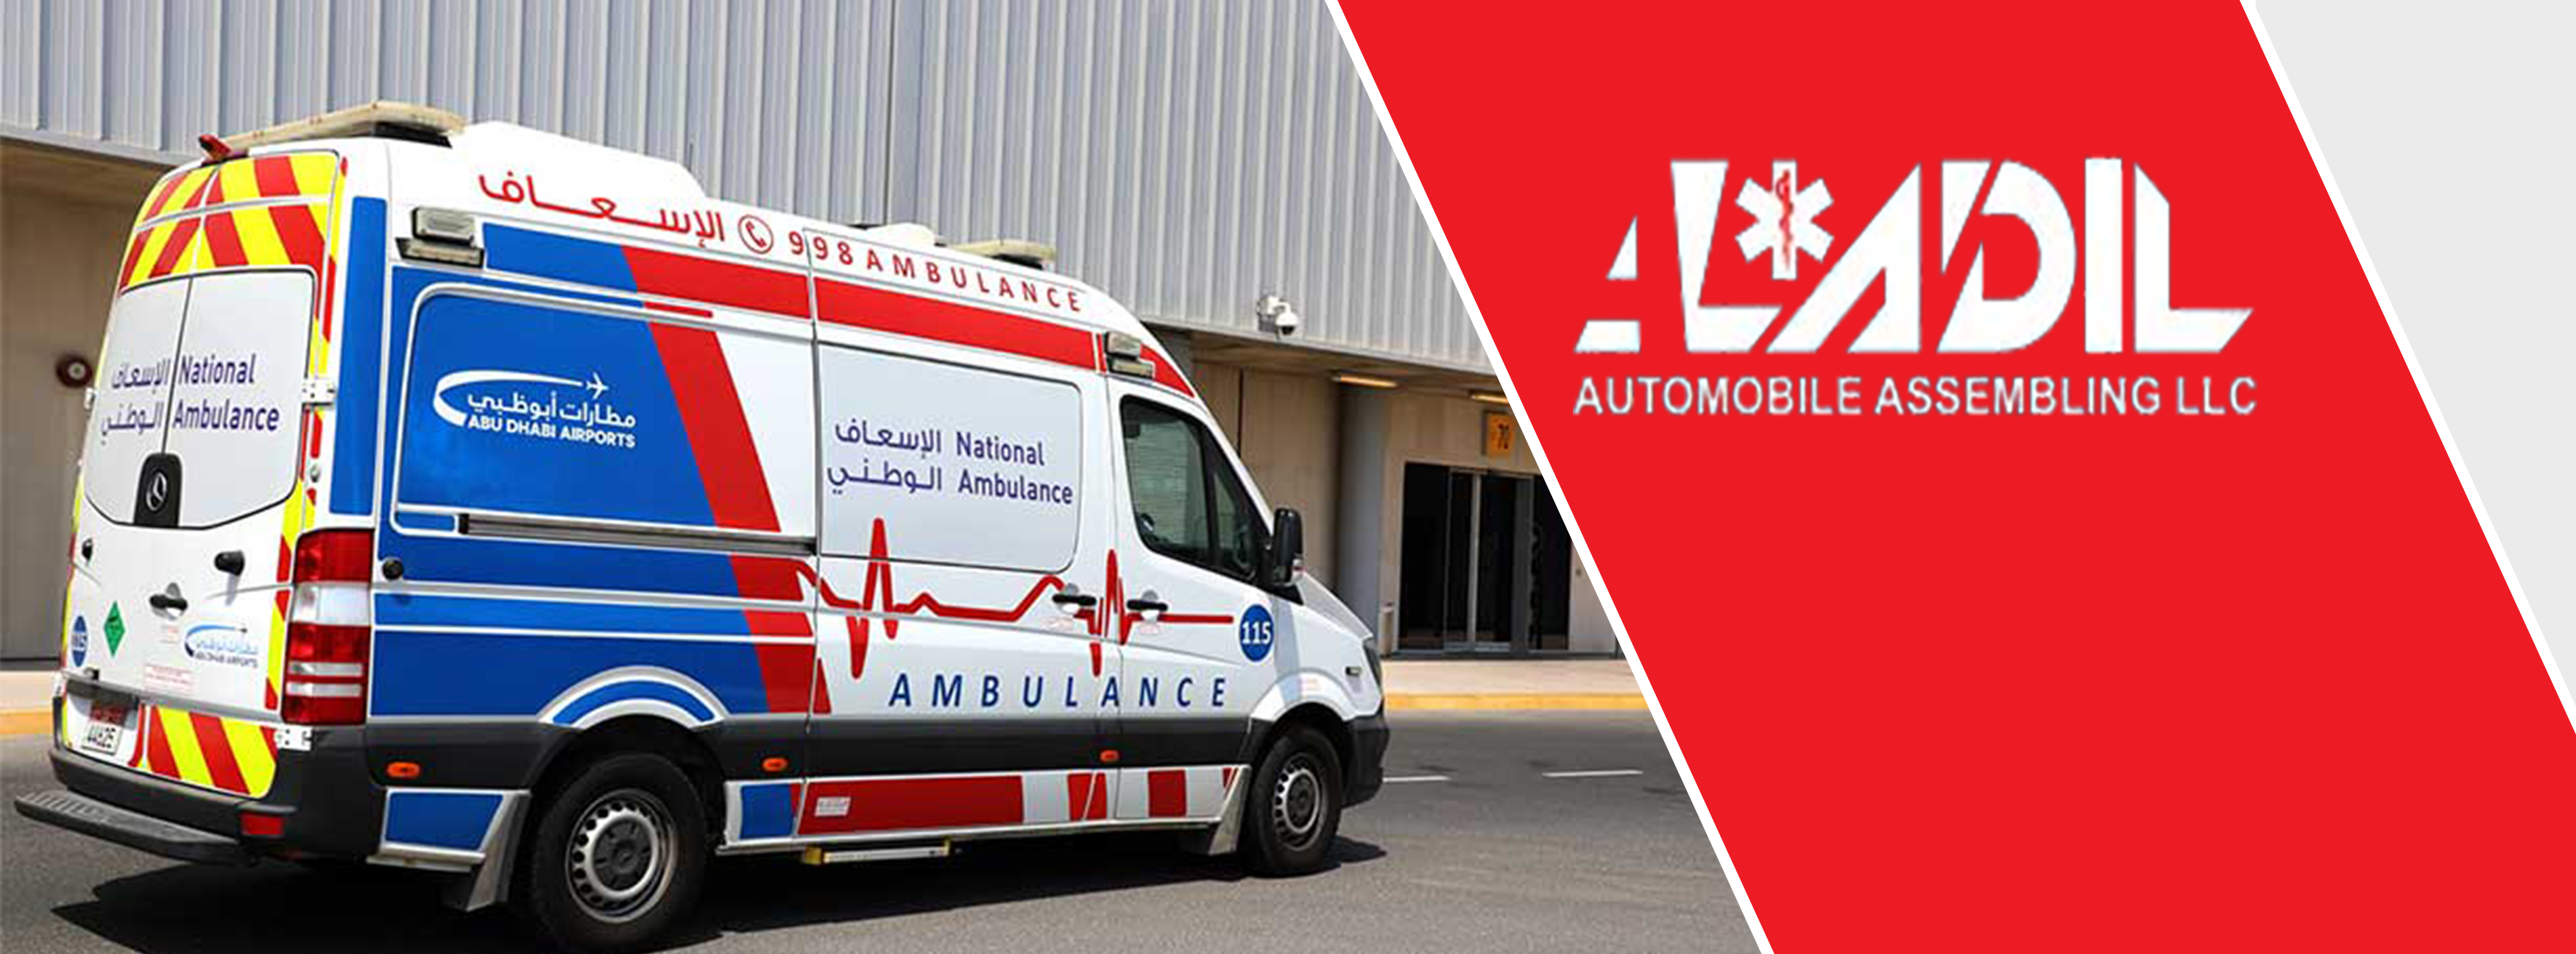 Ambulance Price in UAE